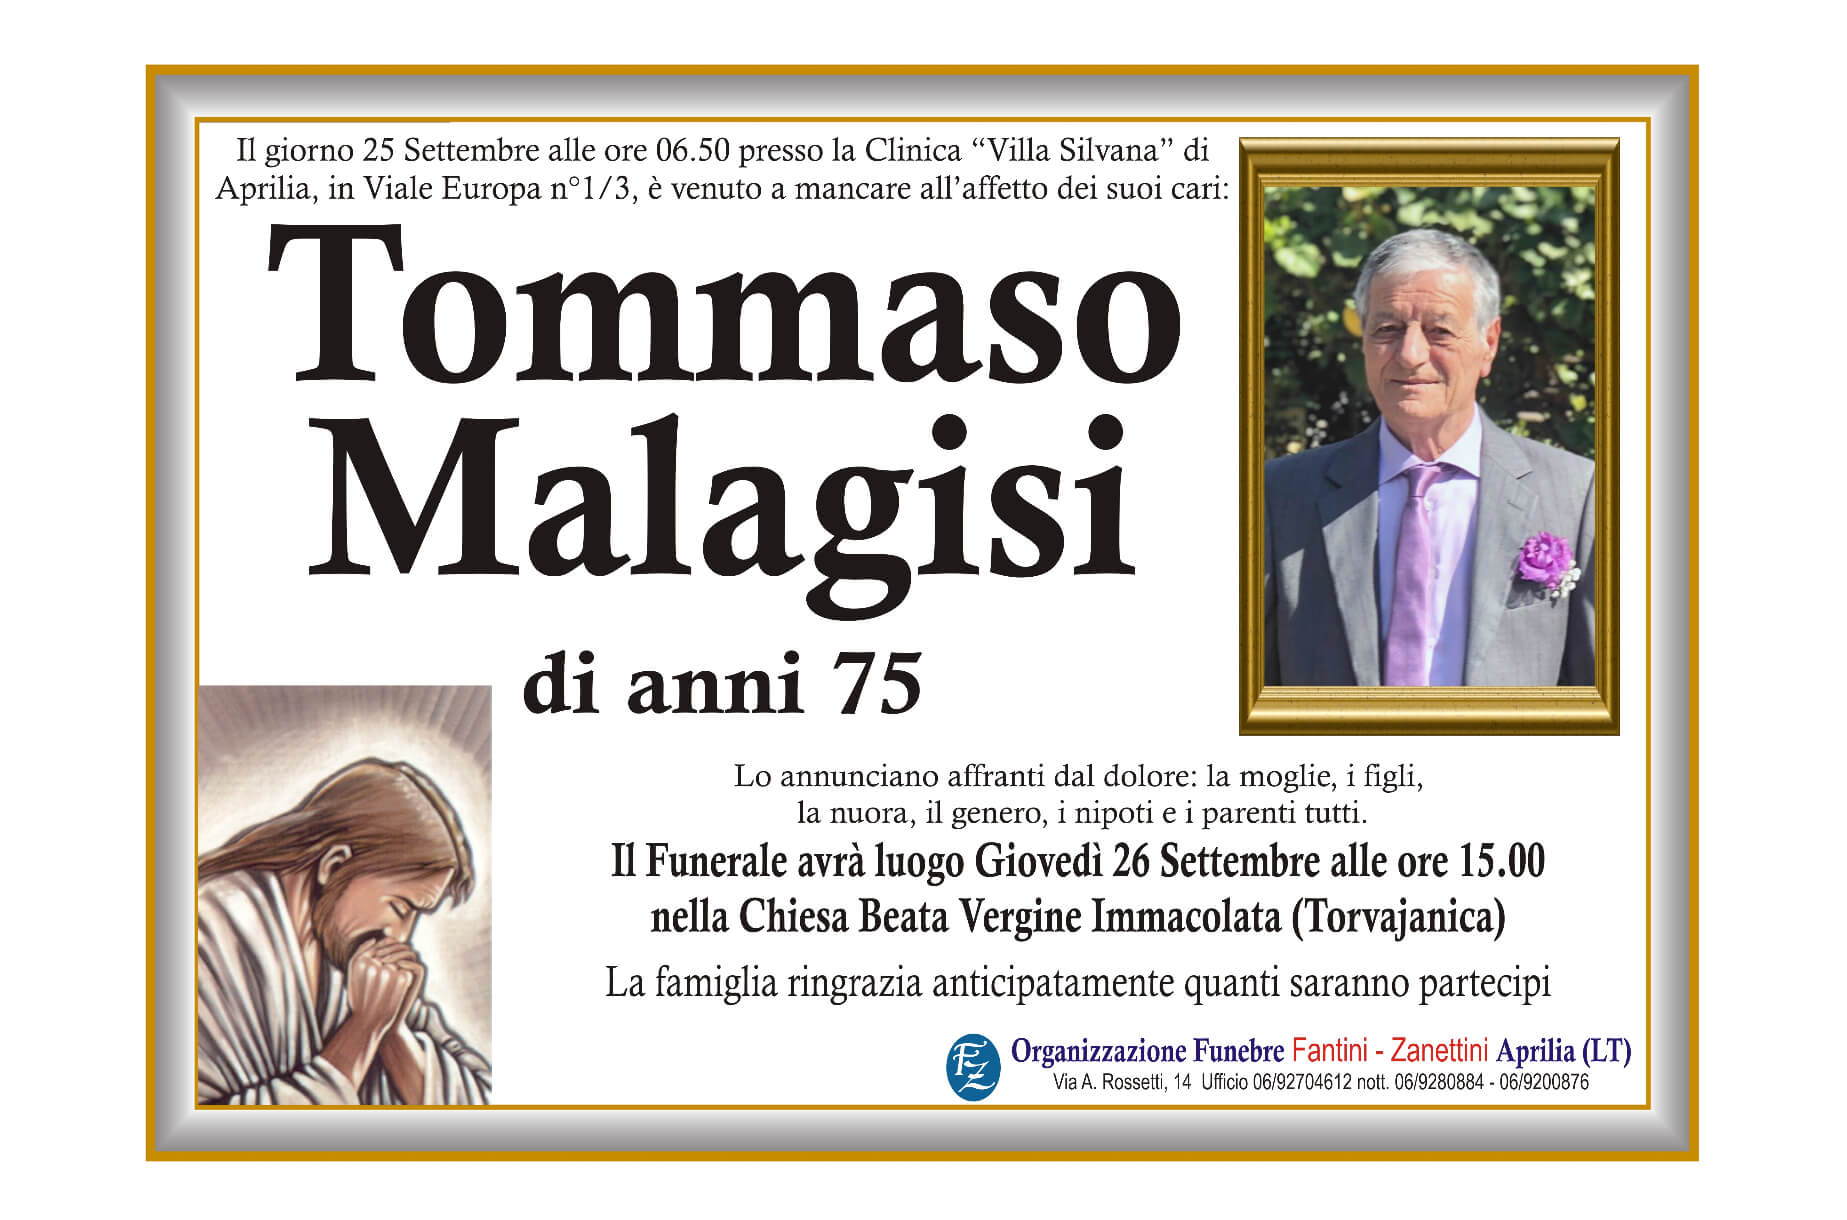 Tommaso Malagisi